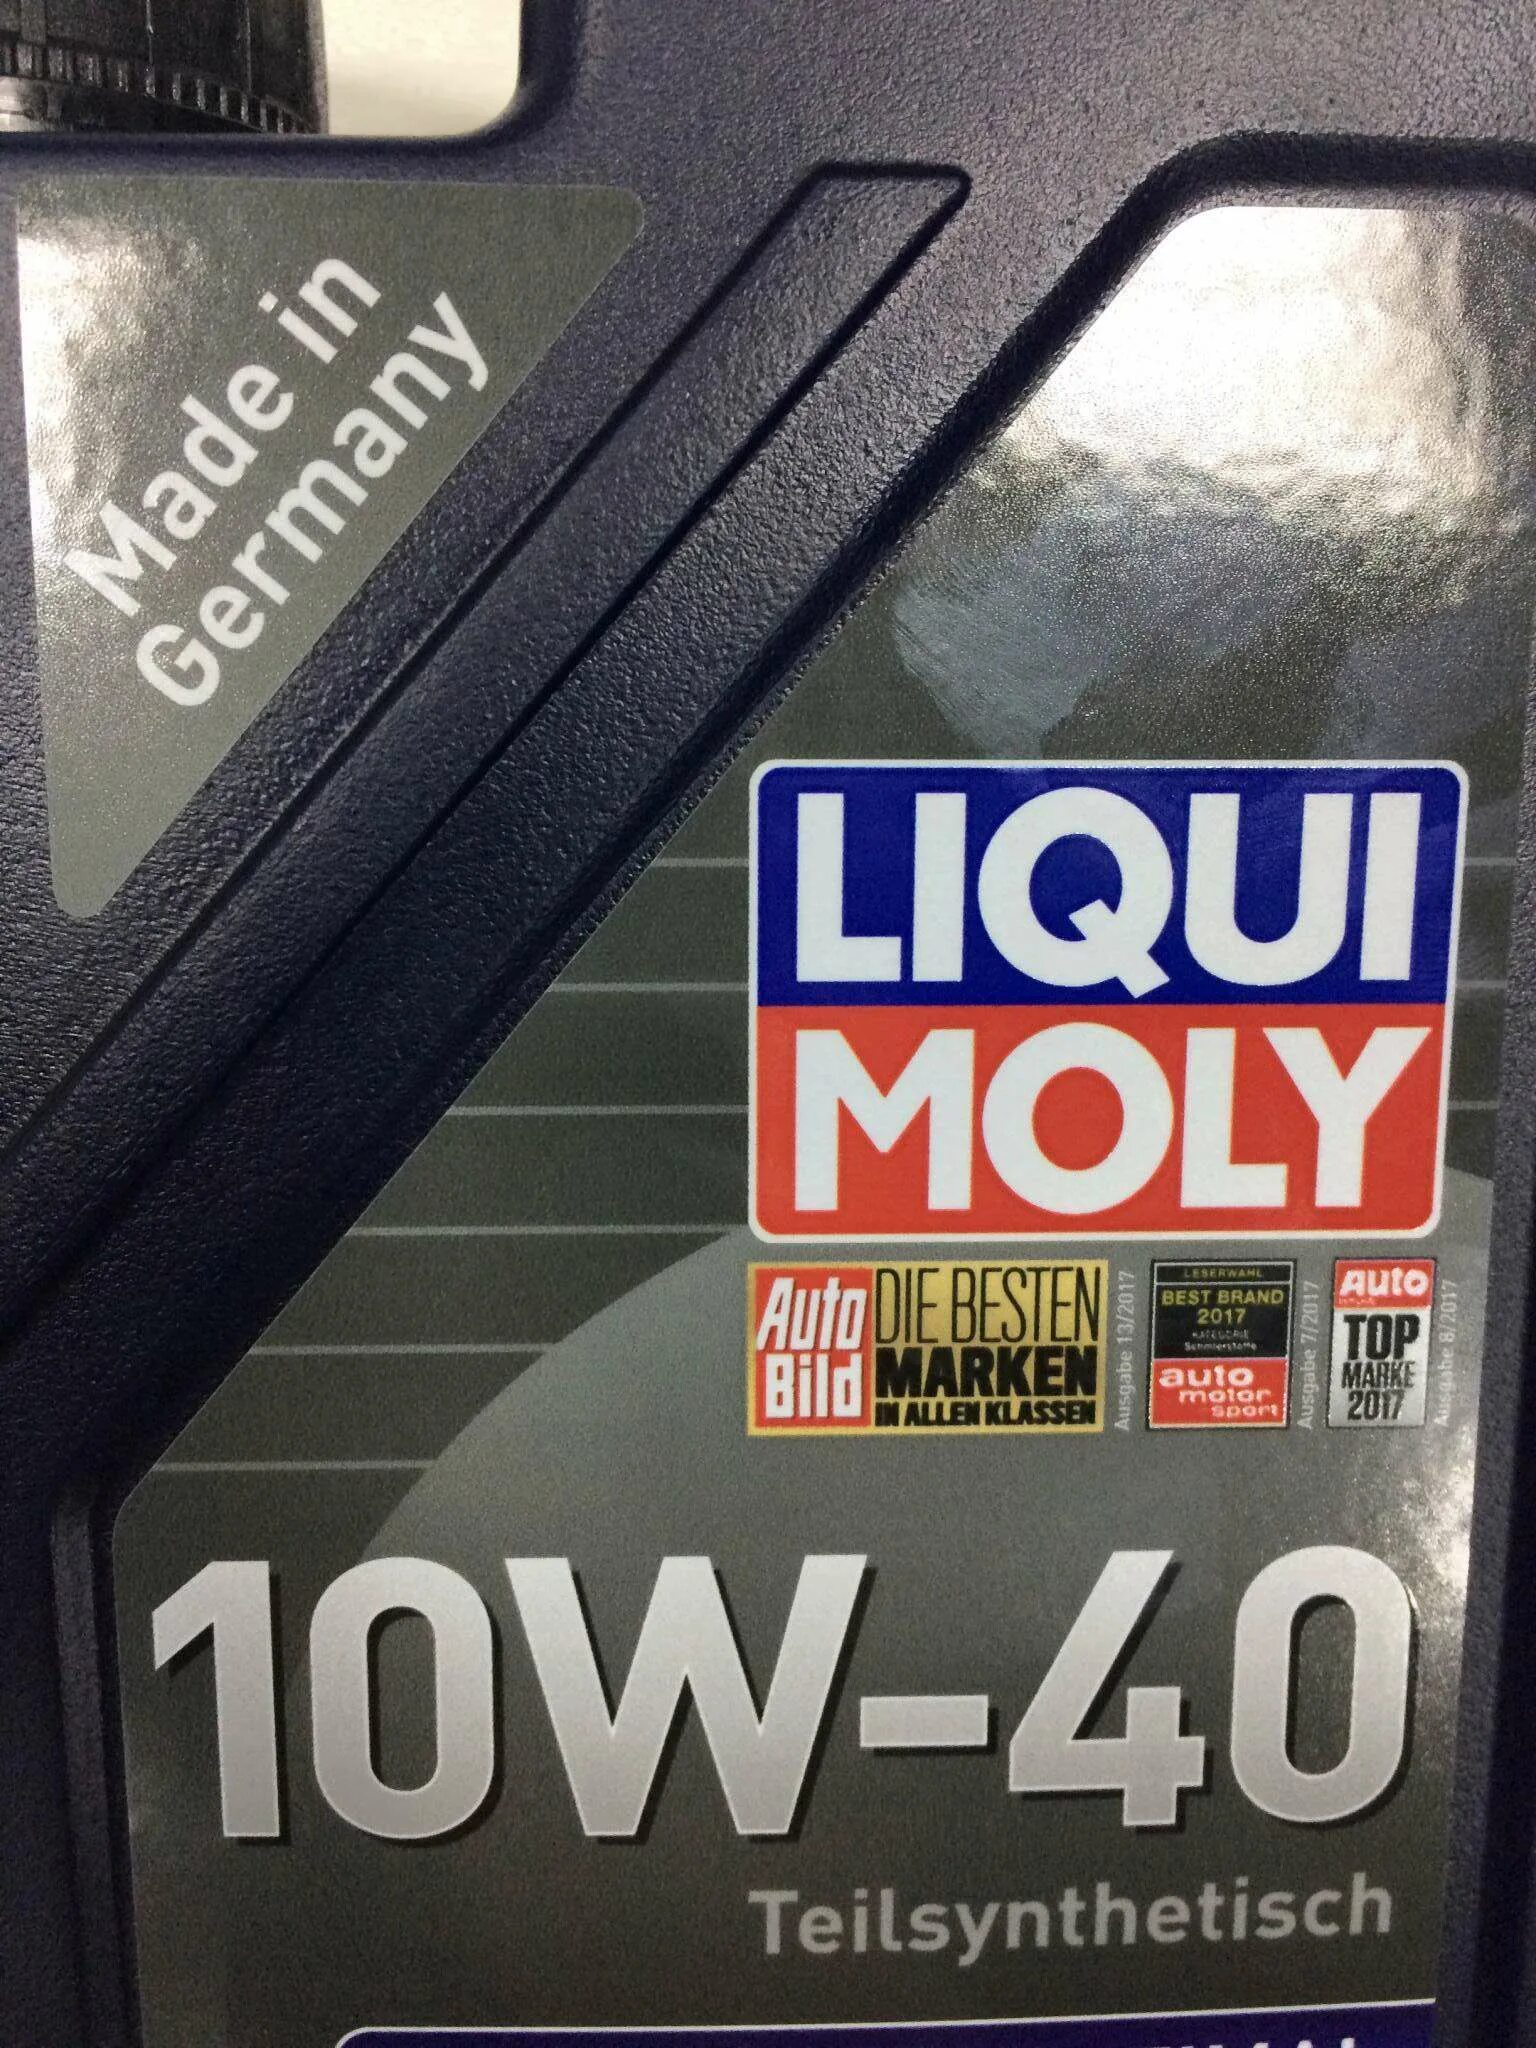 Ликви Молли 10 w 40 OPTIMAL. Ликви моли 10w 40. Liqui Moly 10w 40 полусинтетика. Полусинтетическое моторное масло Liqui Moly OPTIMAL 10w-40, 1 л.